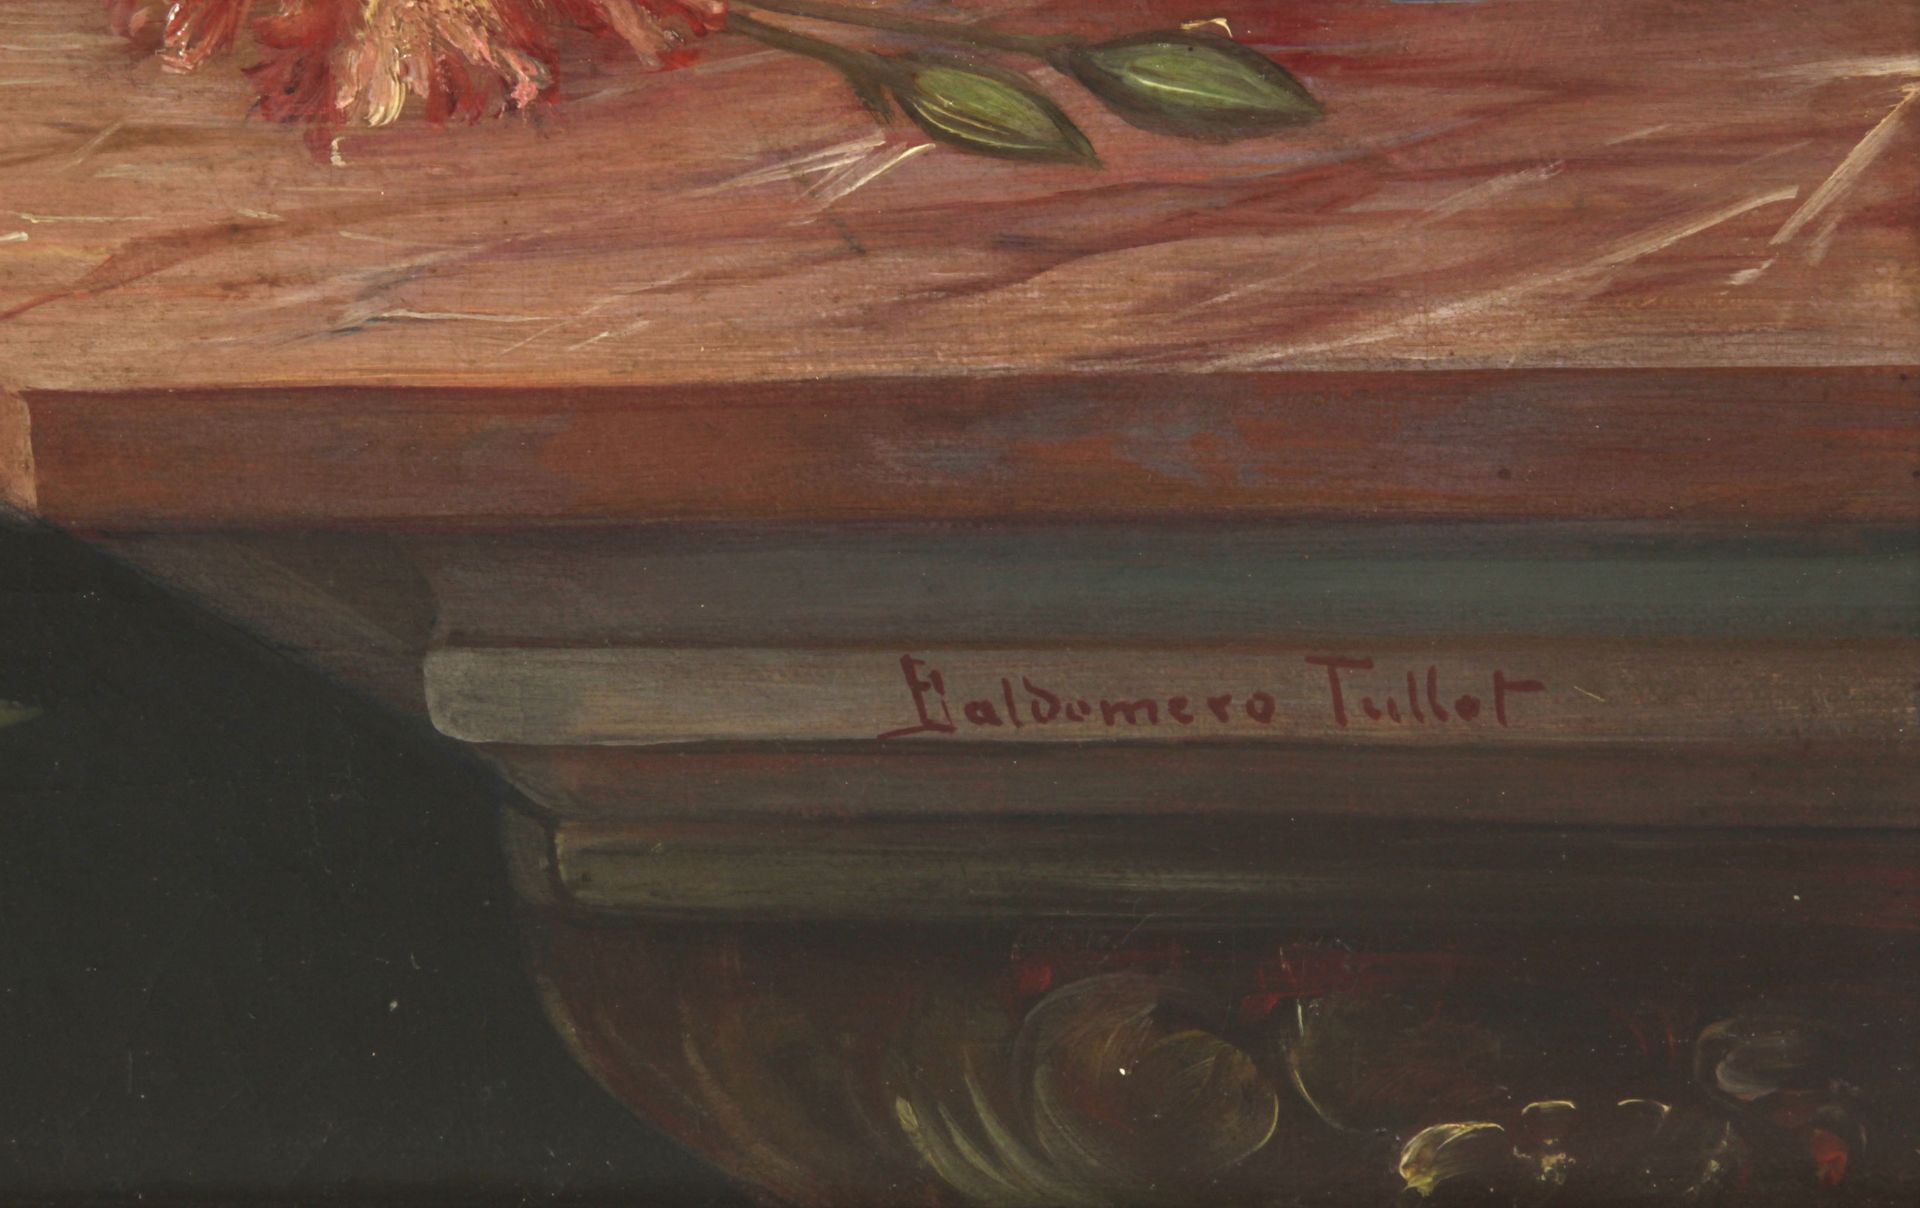 Baldomero Taller - Image 3 of 4